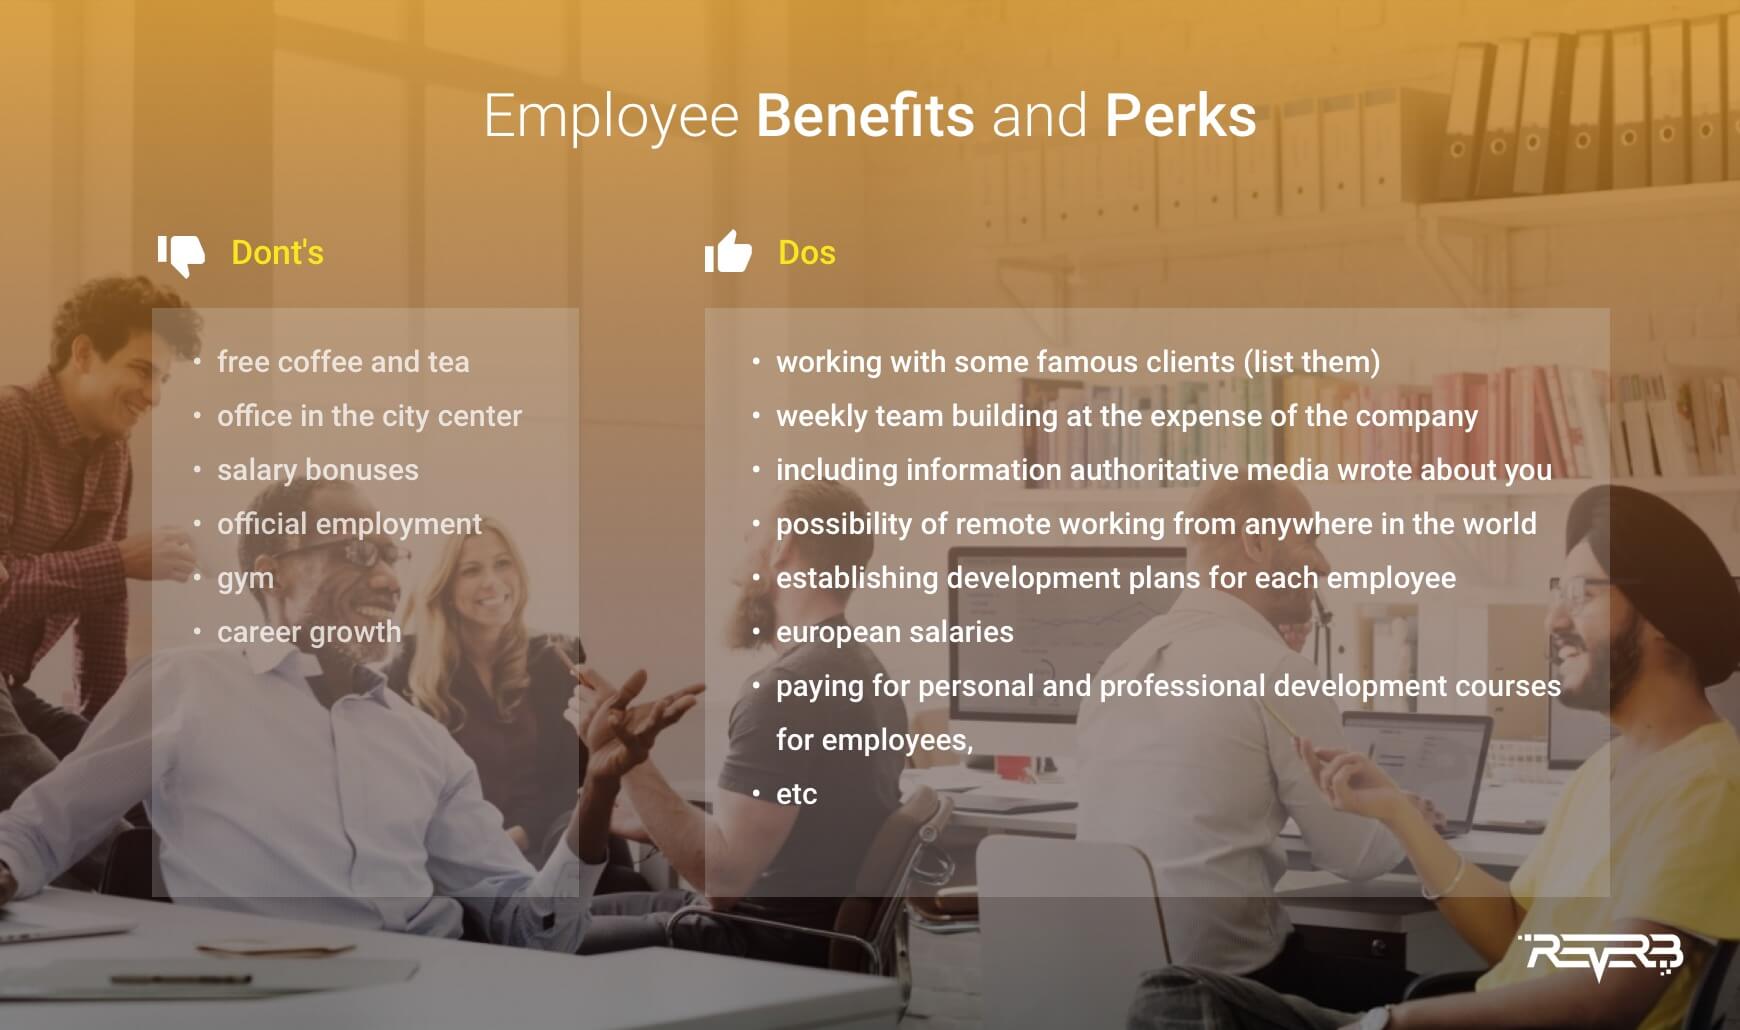 benefits and perks job posting